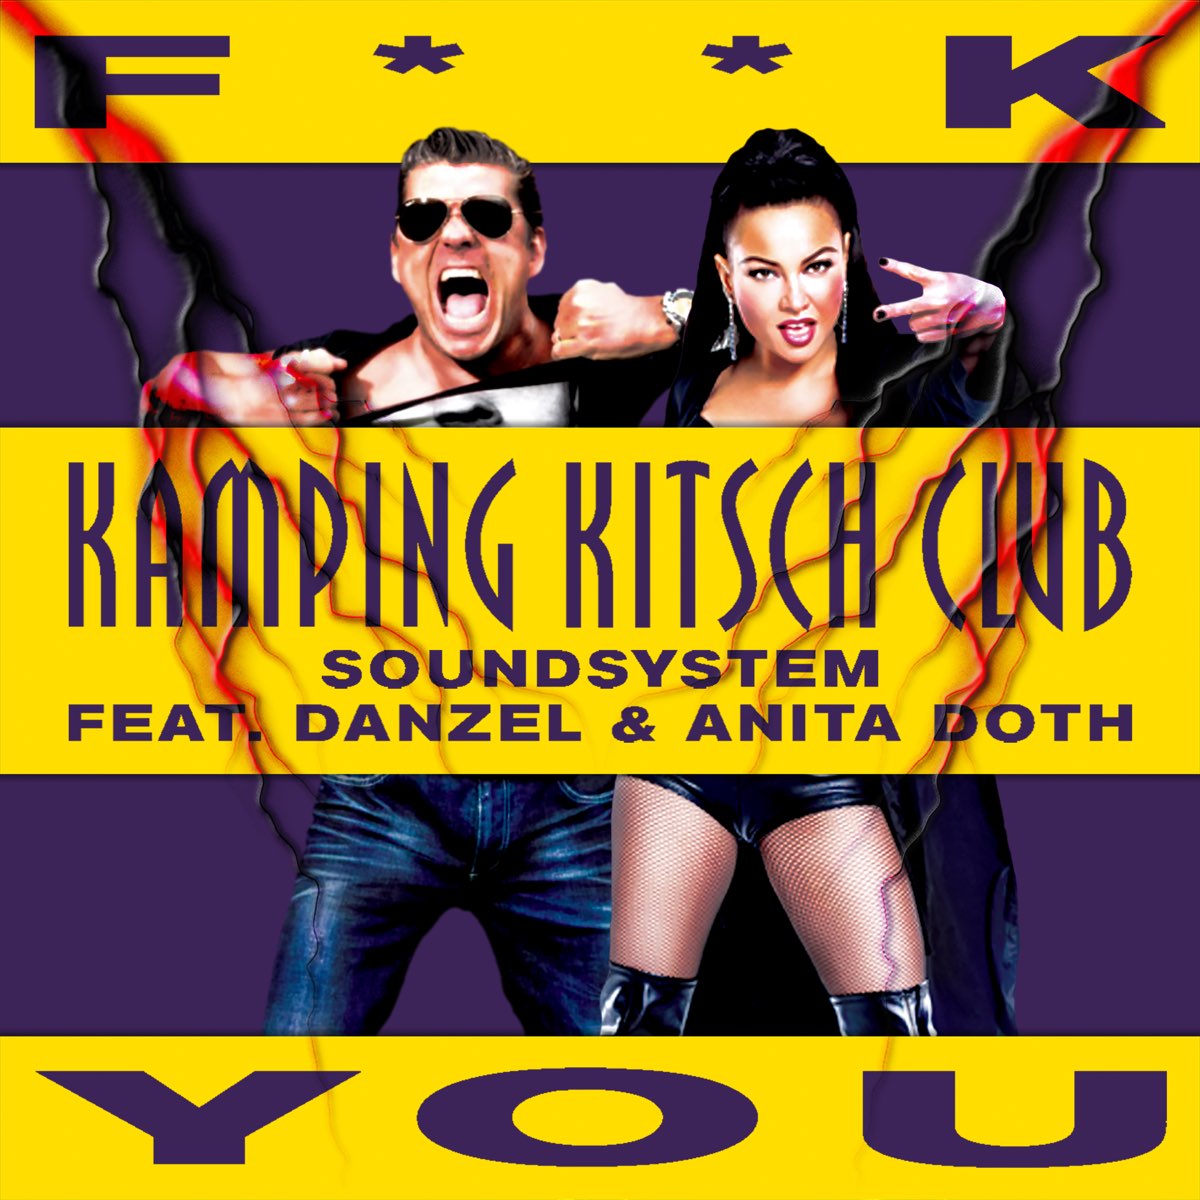 F**k You (feat. Danzel & Anita Doth) - Single - Album by Kamping Kitsch  Club Soundsystem - Apple Music